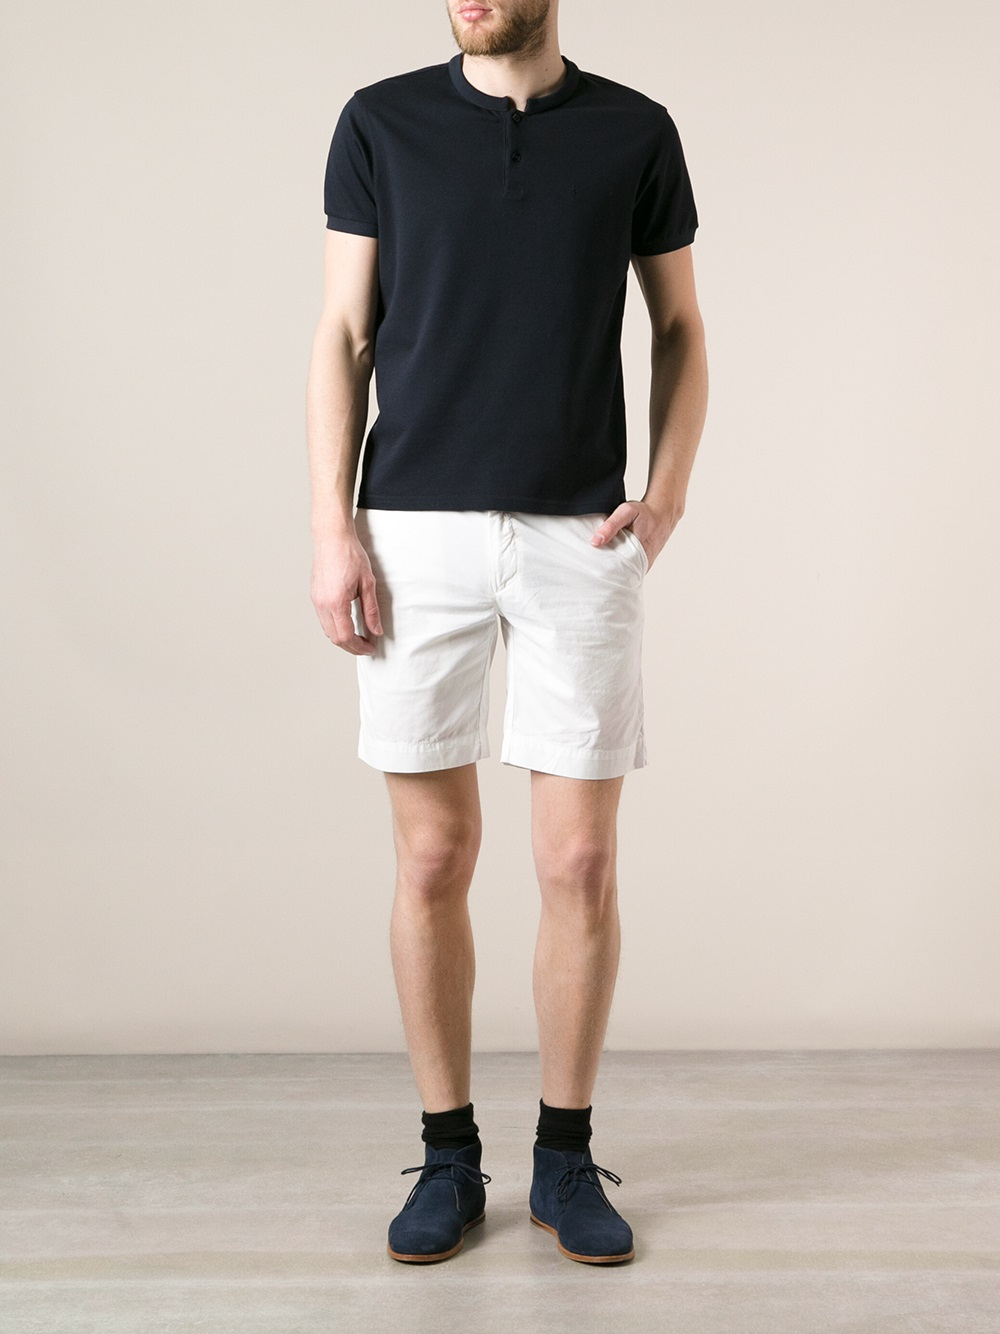 Lyst - Polo Ralph Lauren Bermuda Shorts in White for Men